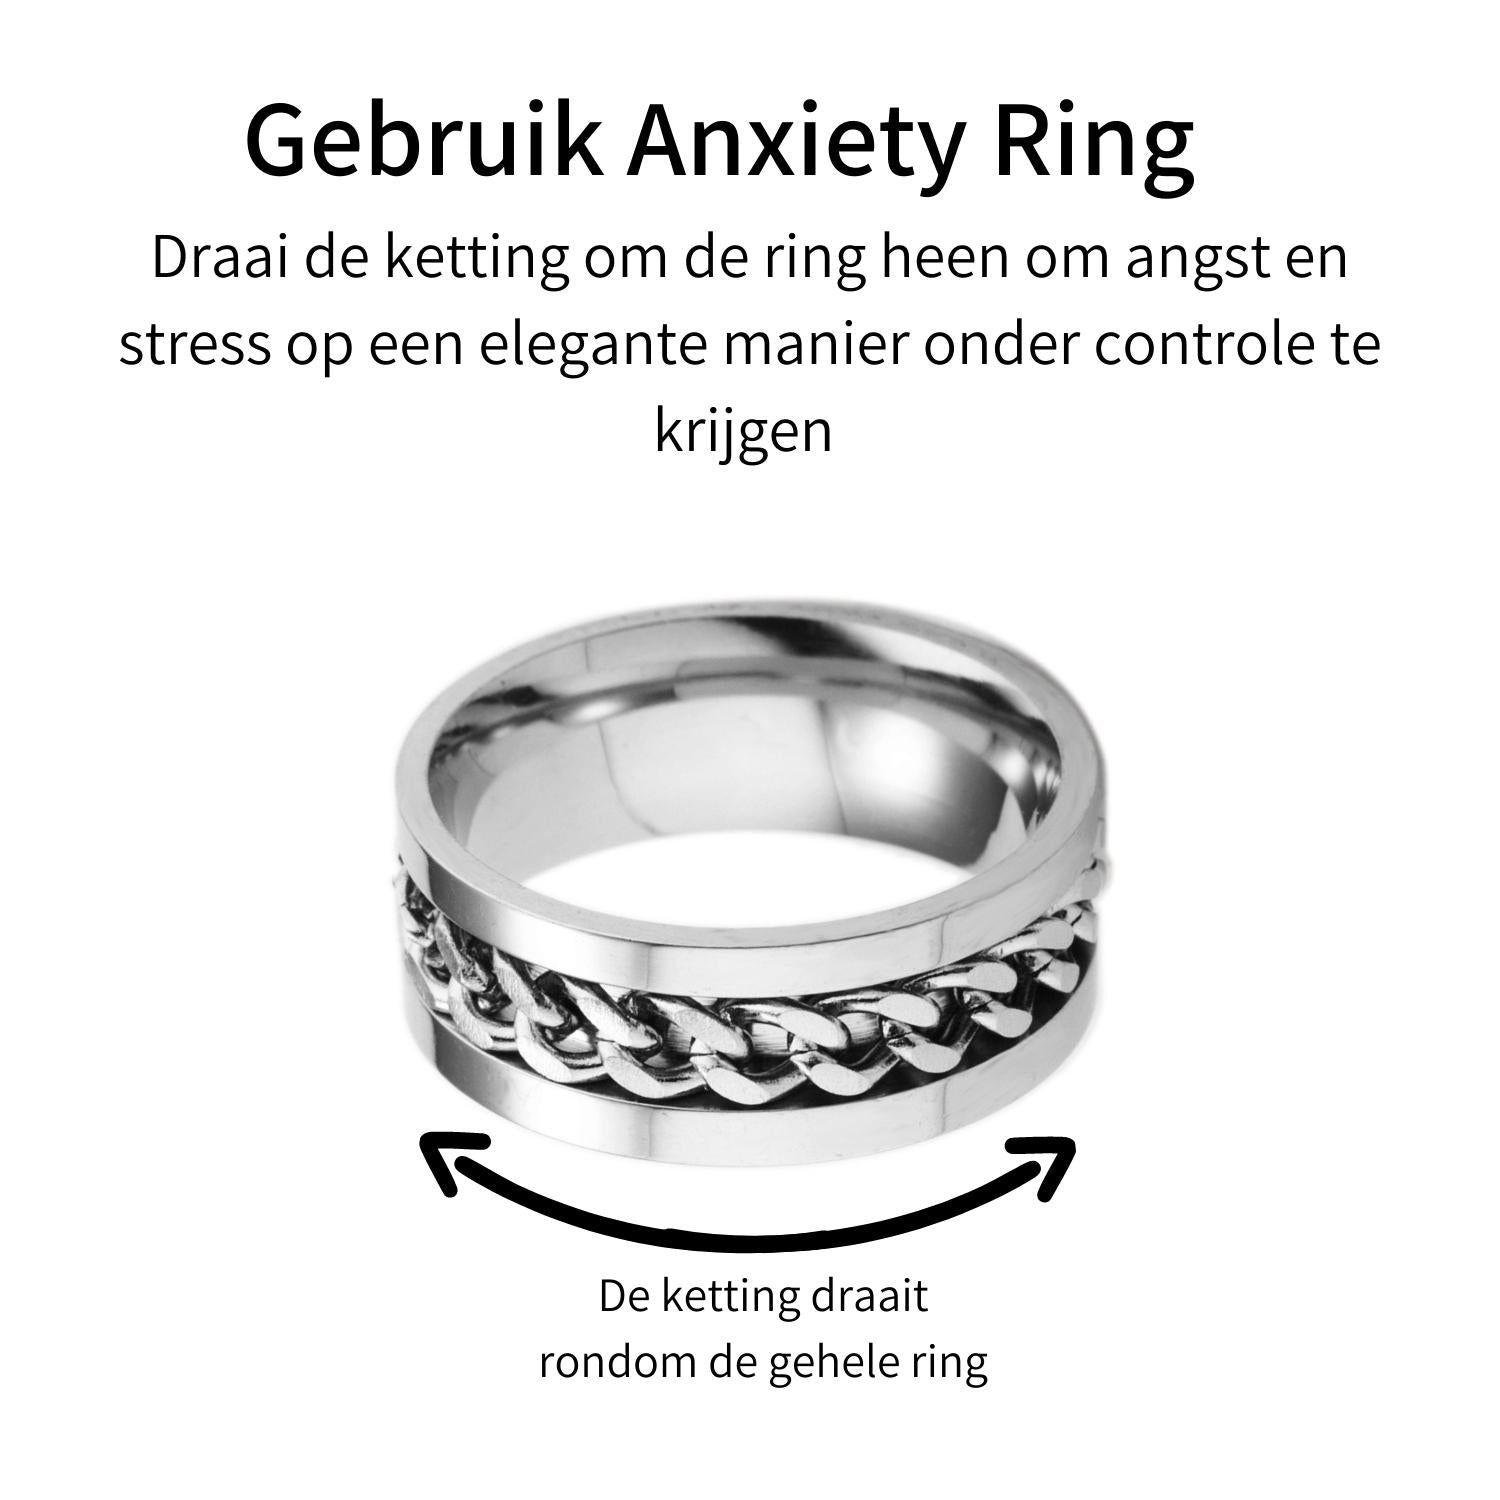 Anxiety Ring (Kettinkje) Zilveren ketting Gebruik